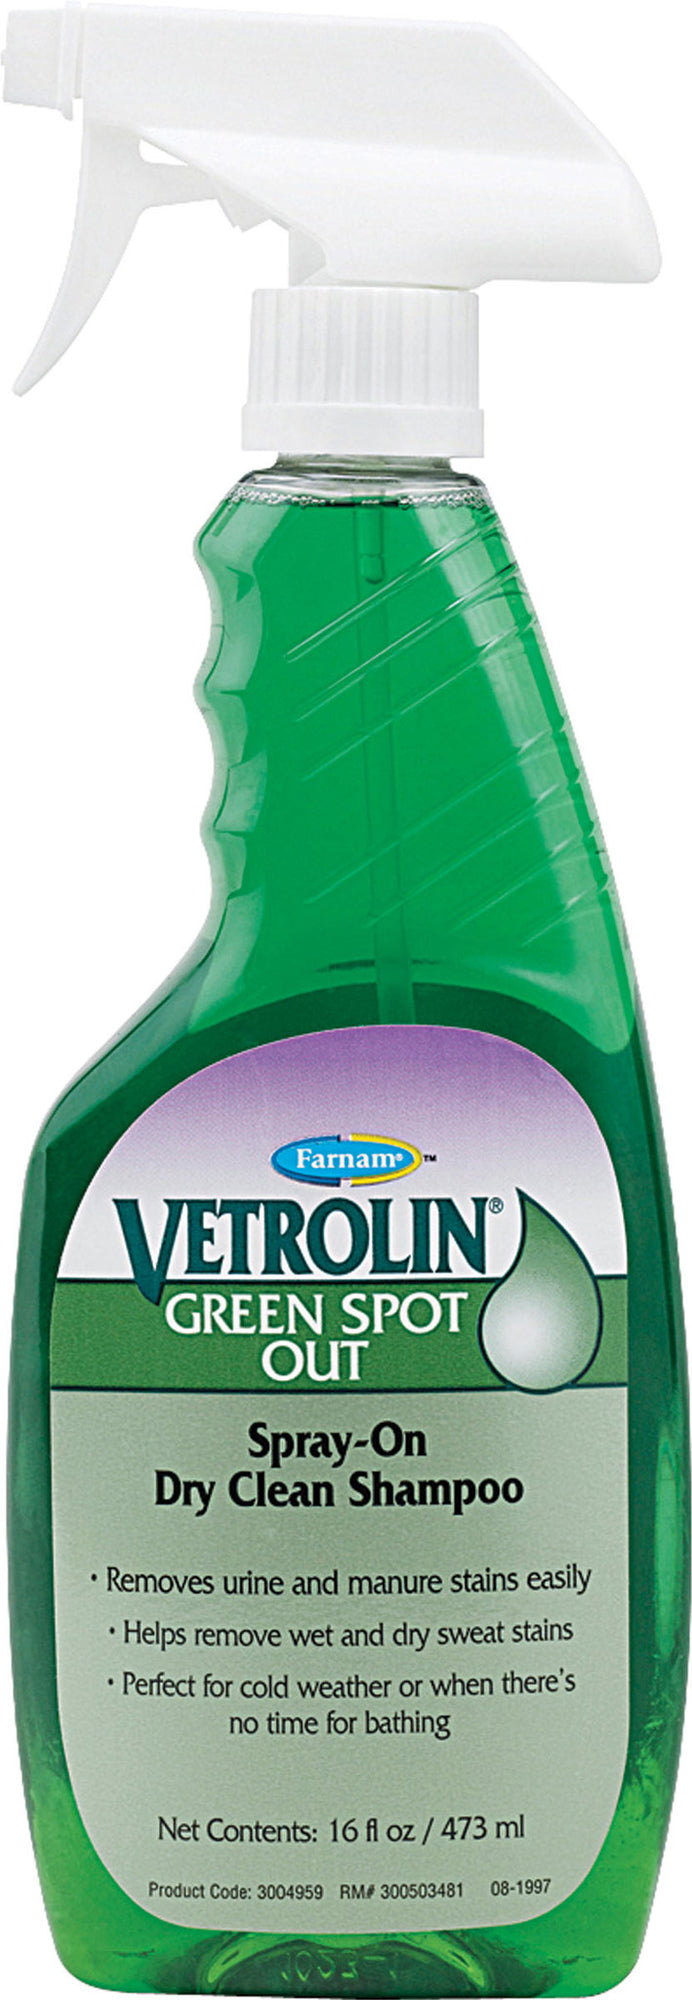 Vetrolin Green Spot Out Dry Clean Shampoo Spray